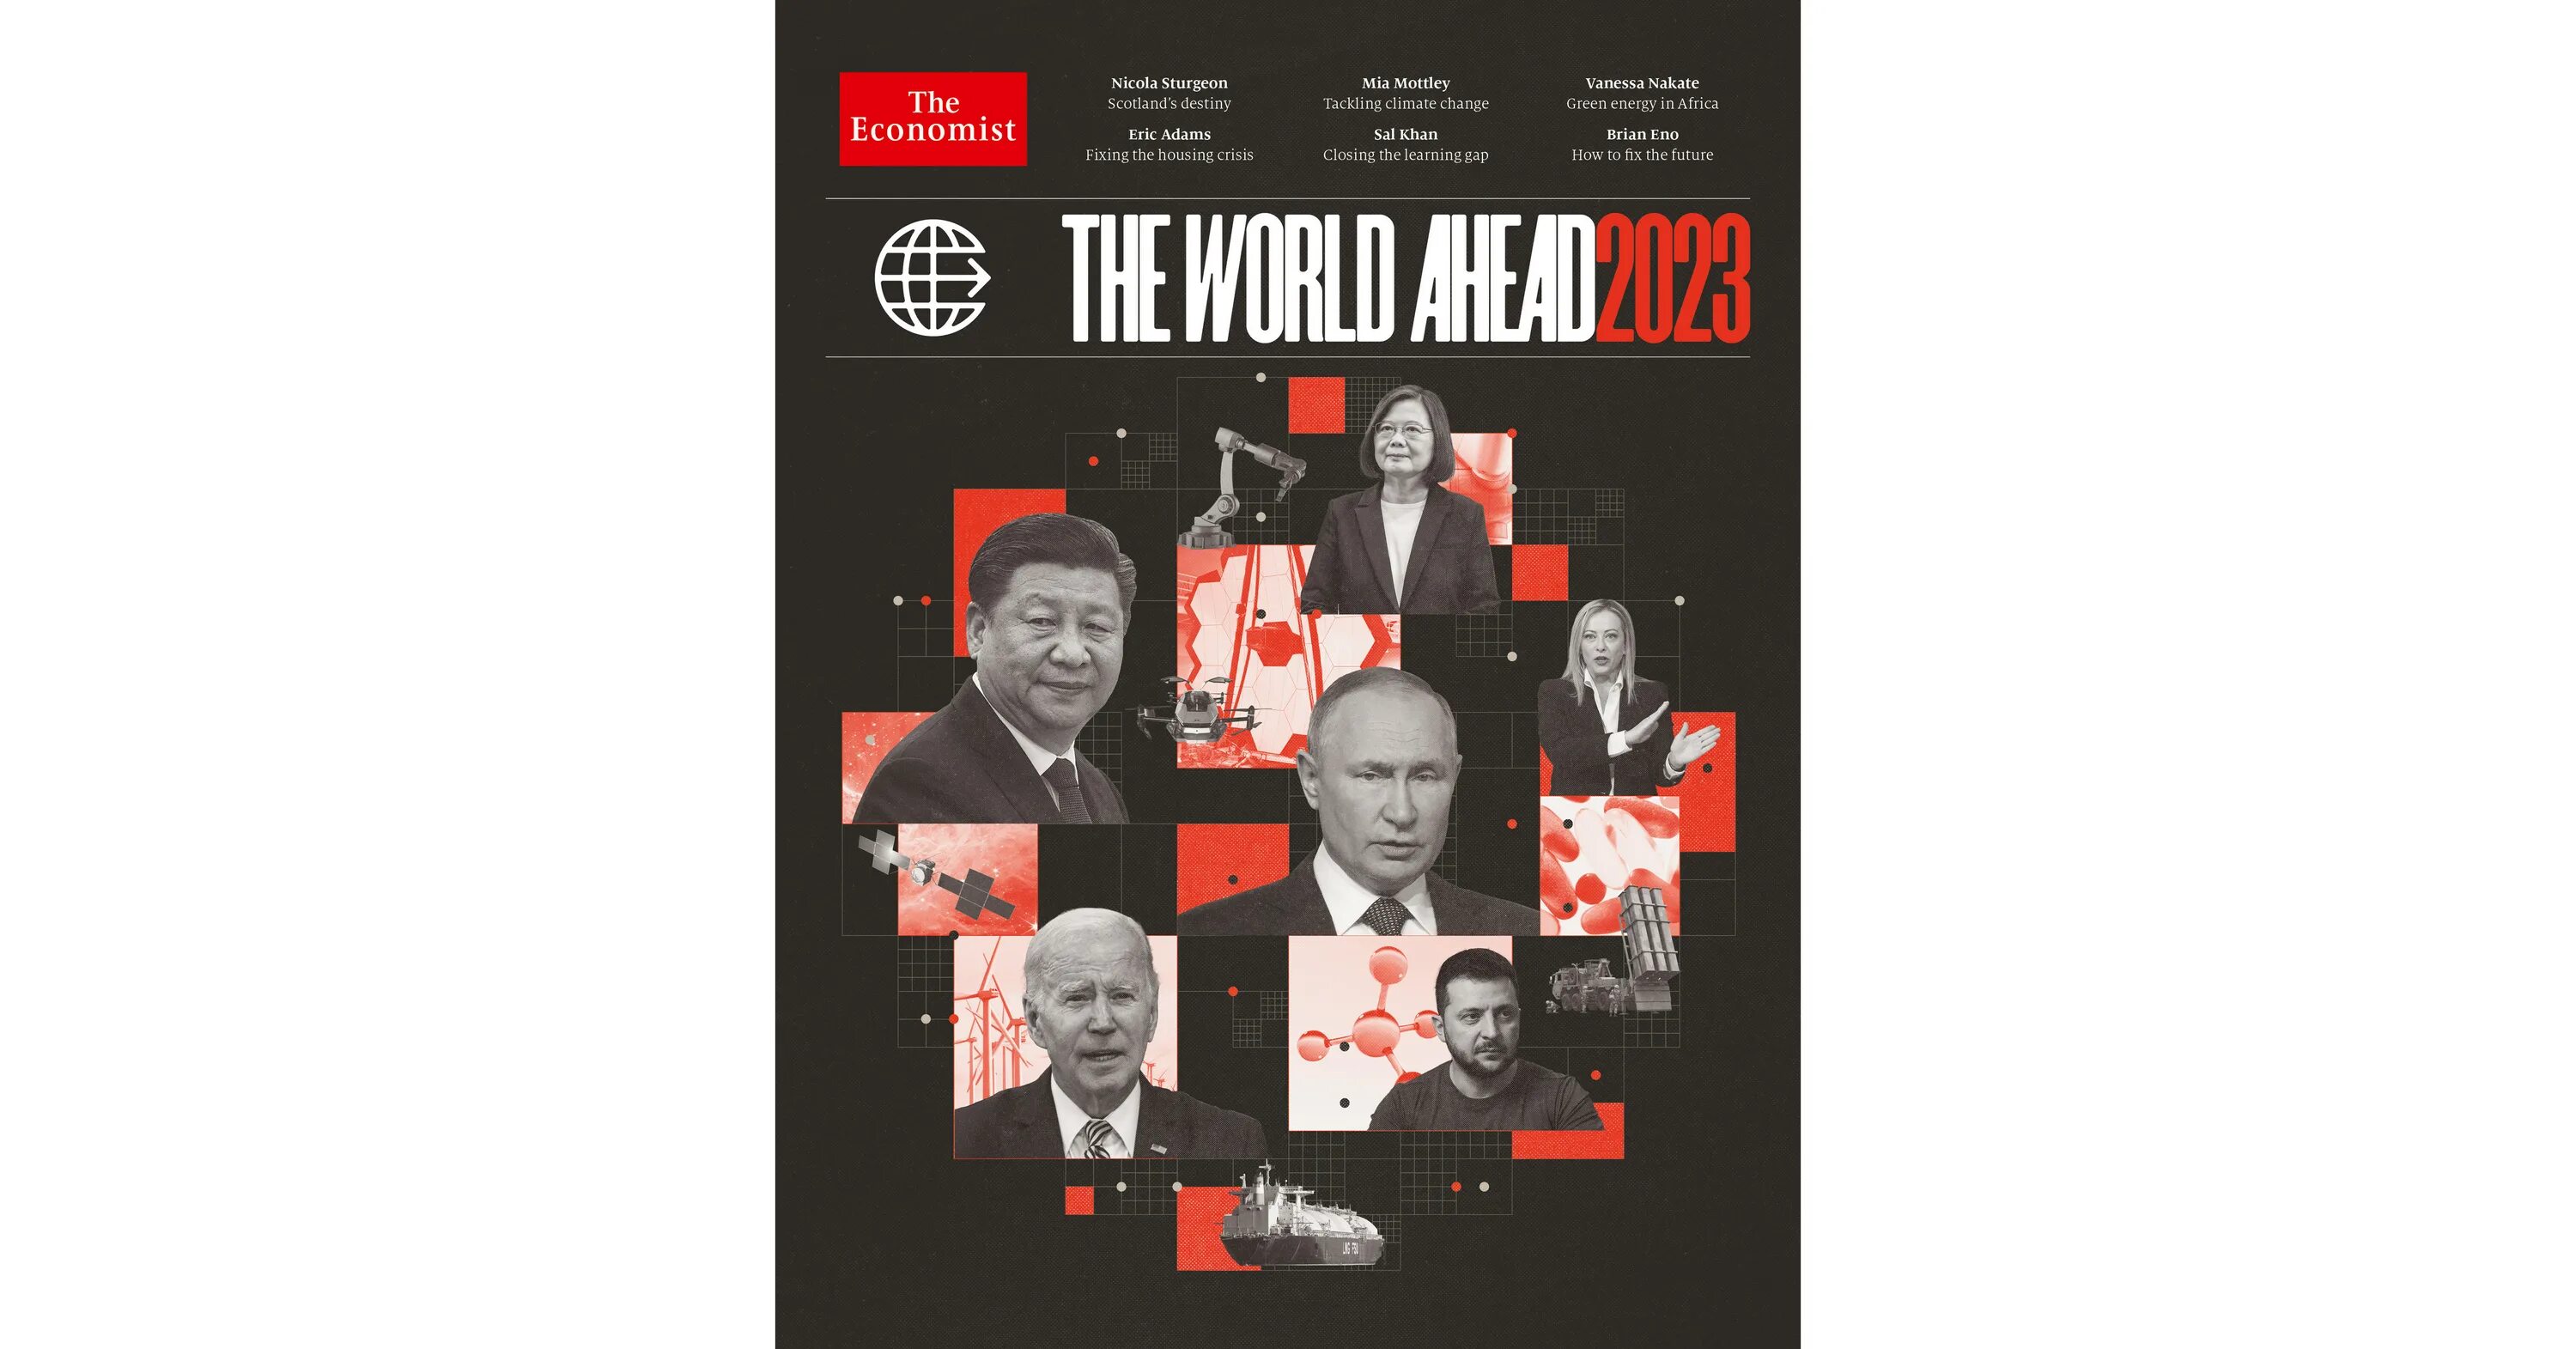 Обложки журнала the Economist за 2023. Ротшильд журнал экономист 2023. Обложка журнала экономист 2023. Новая обложка журнала the Economist 2023.